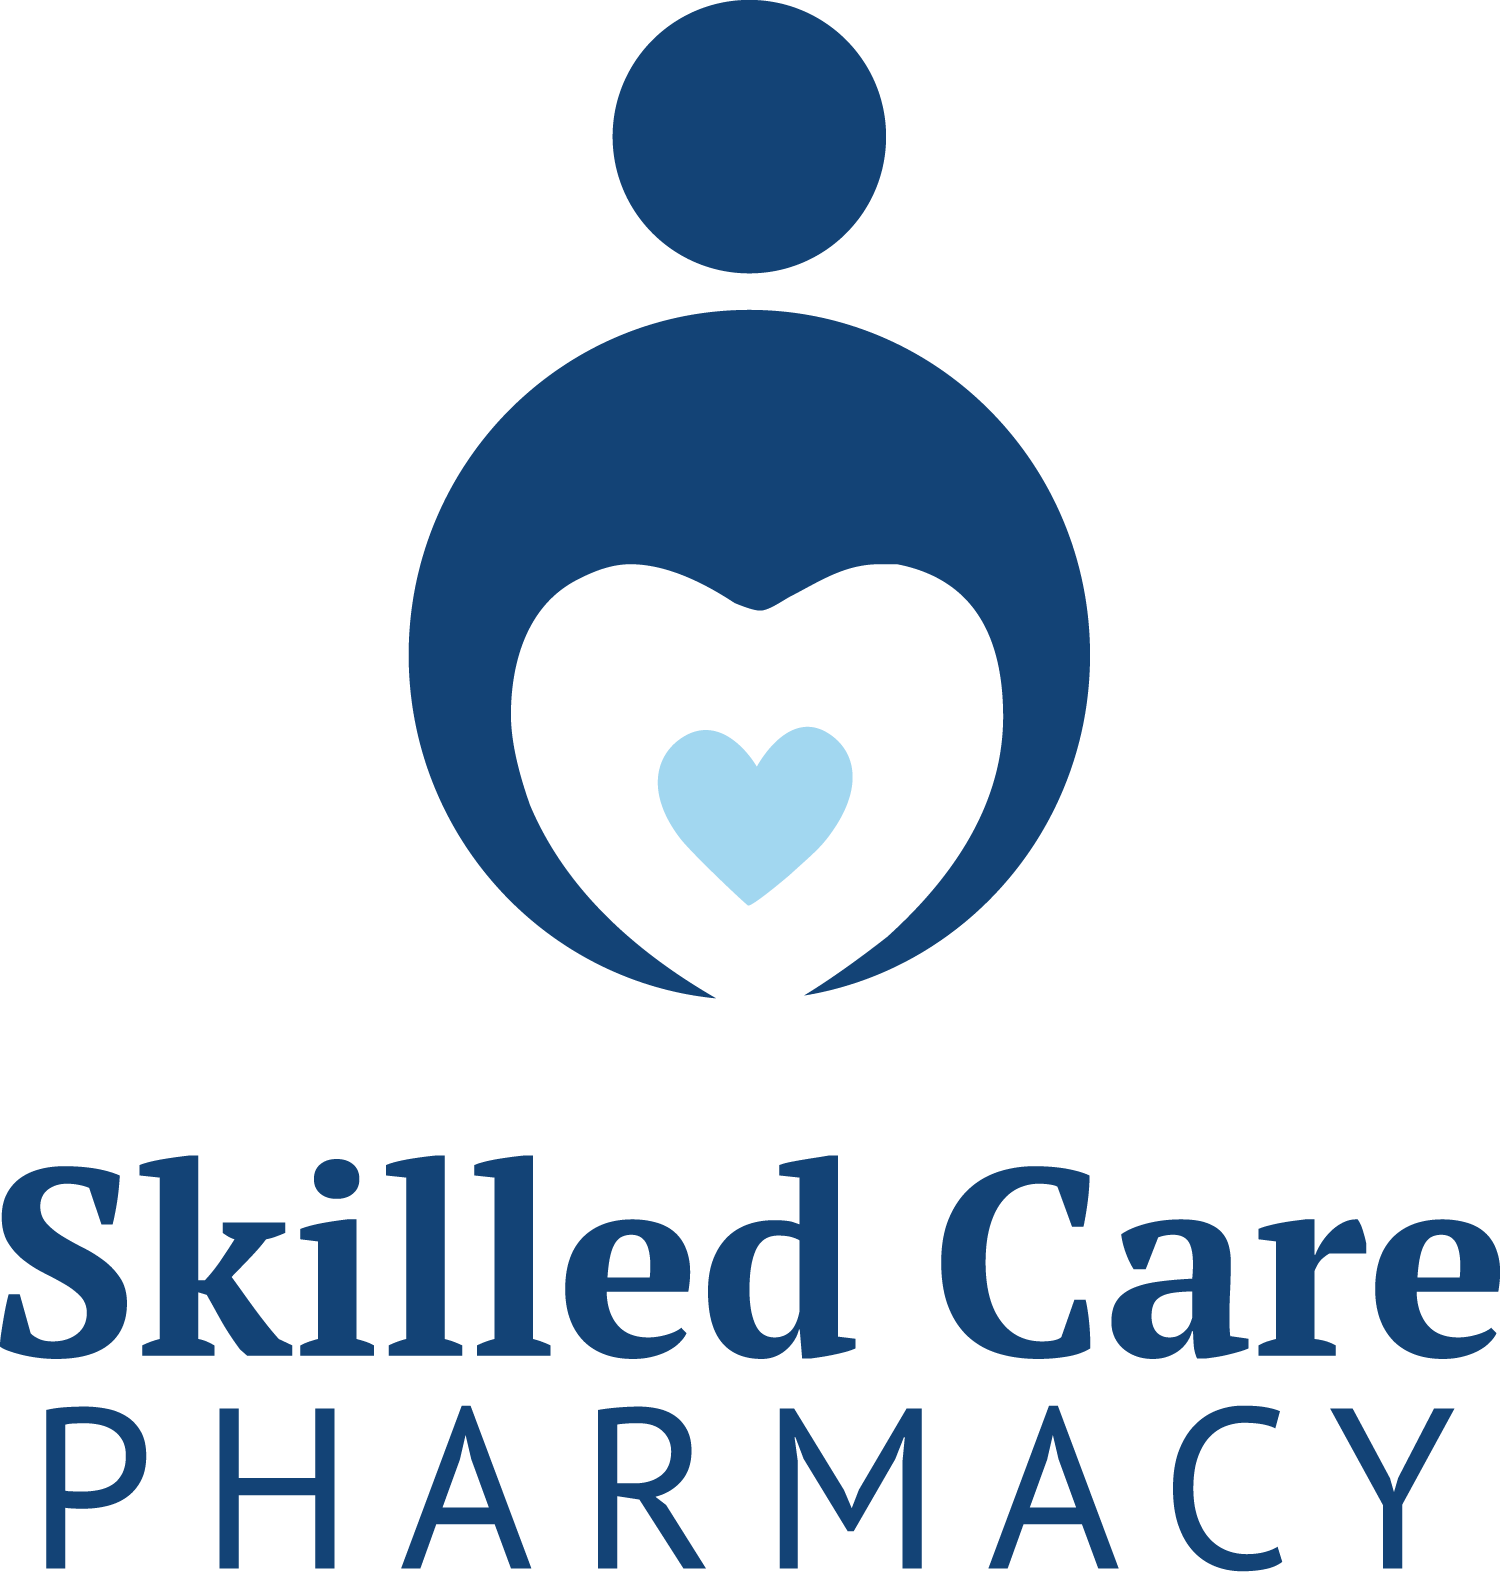 Skilled Care Pharmacy